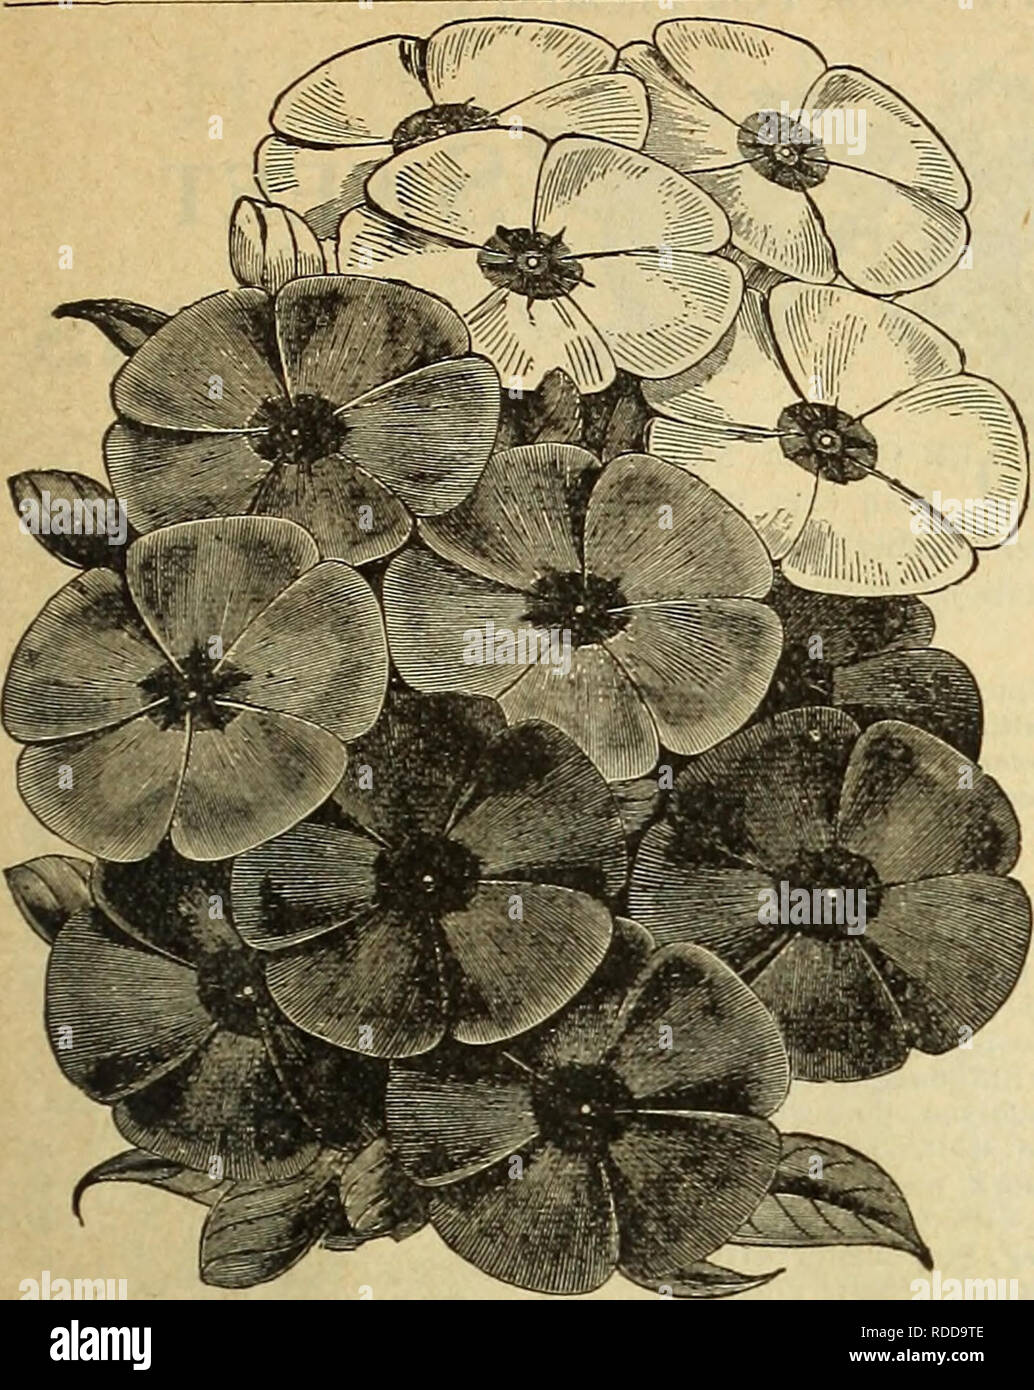 . E. H. Hunt's catalogue. Nurseries (Horticulture) Illinois Catalogs; Bulbs (Plants) Catalogs; Flowers Catalogs; Gardening Equipment and supplies Catalogs. E. H. HUNT, CHICAGO, CATALOGUE FOR FLORISTS.. PHLOX DRUMMONDI. RICINUS (CASTOR OIL PLANT.) Per oz. Borboniensis 15 Gibsoni.. IS Per oz. Africanus 15 Sanguineus 10 Cambodgensis. (,U, Mixed lb., 75c. 10 PHLOX DRUMMONDI. Trade Pkt. Oz. White, Scarlet, Pink, each 10 60 Mixed.. : 10 40 Atropurpurea, blood red  10 GO Star of Quedlinburg 10 GRANDIFLORA; OR, LARGE-FL. VARIETIES. Alba, white; Coccinea, scarlet; Rosea, pink, each 10 1.00 Splendens, c Stock Photo